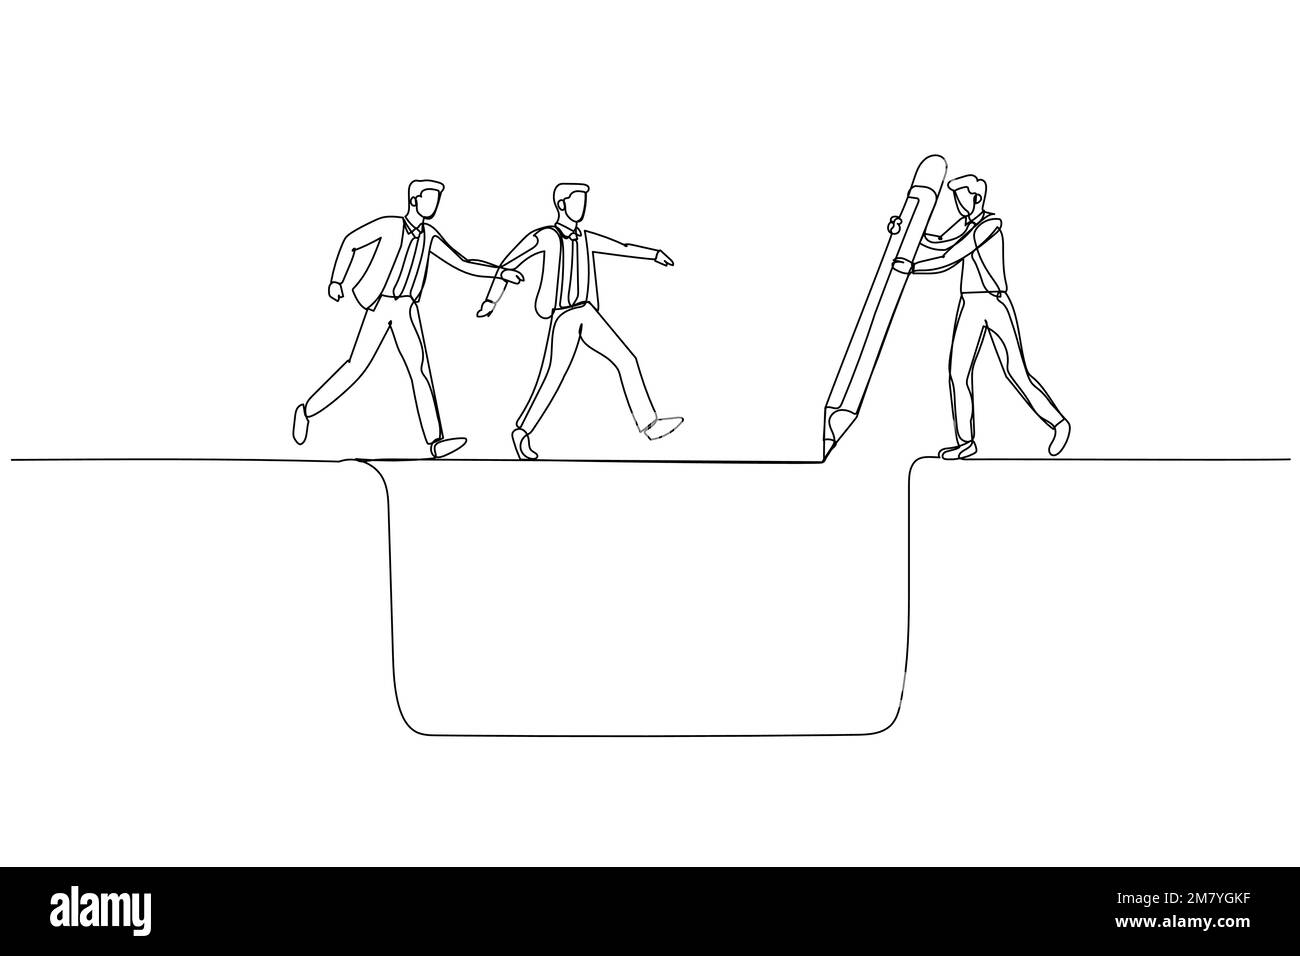 Illustration of businessman manager draw bridge help team cross cliff concept of leadership. Single line art style design Stock Vector